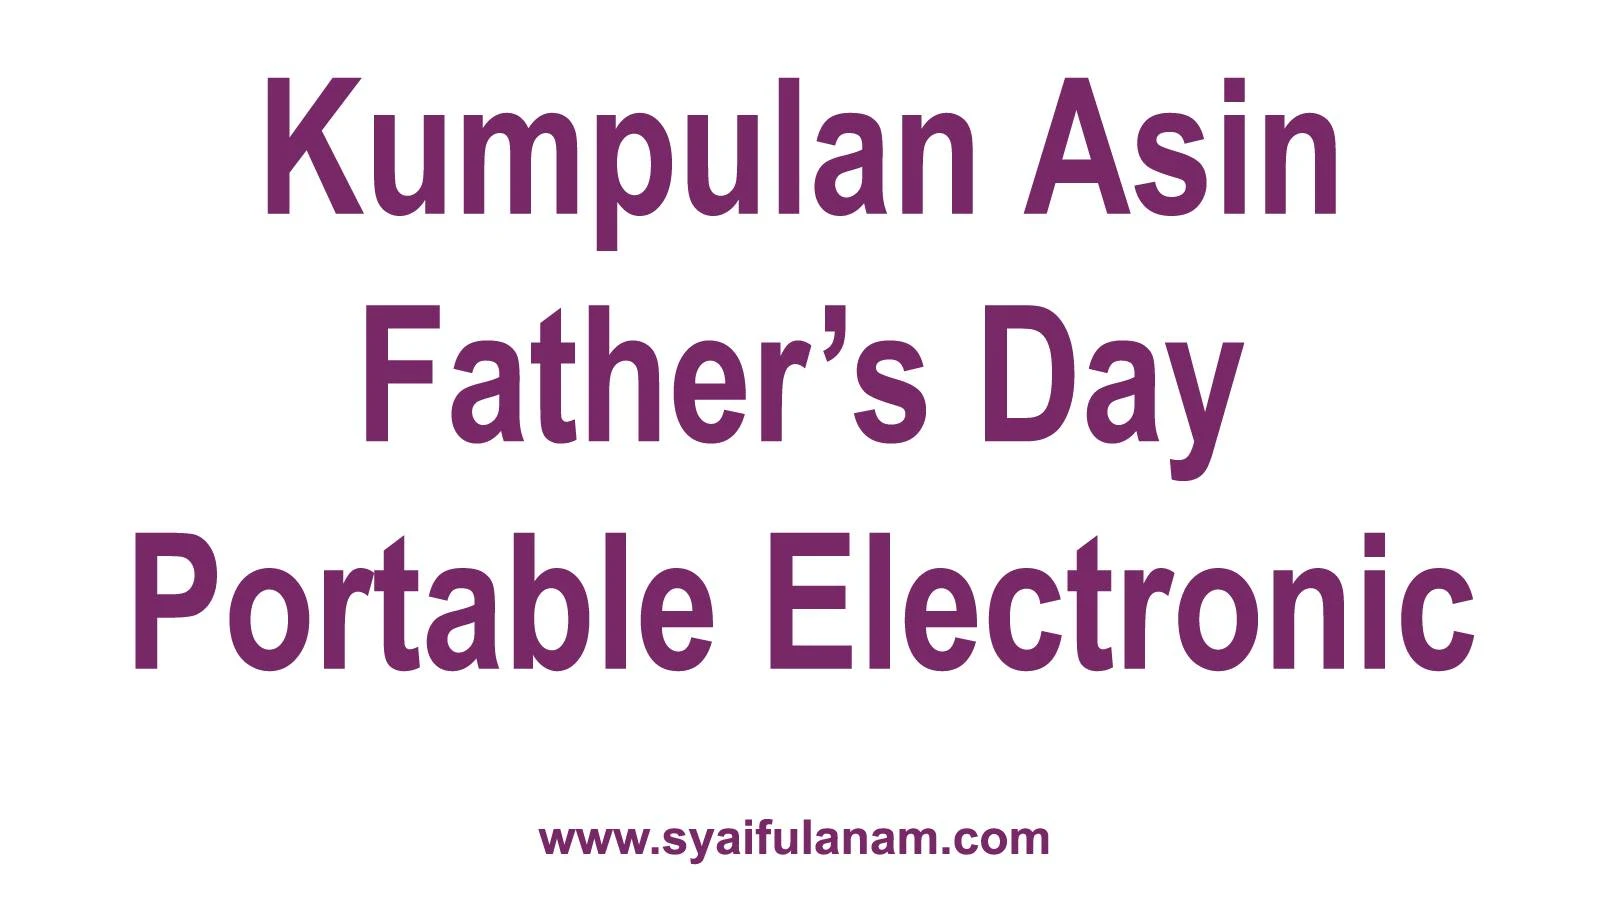 Kumpulan Asin Father's Day Portable Electronic